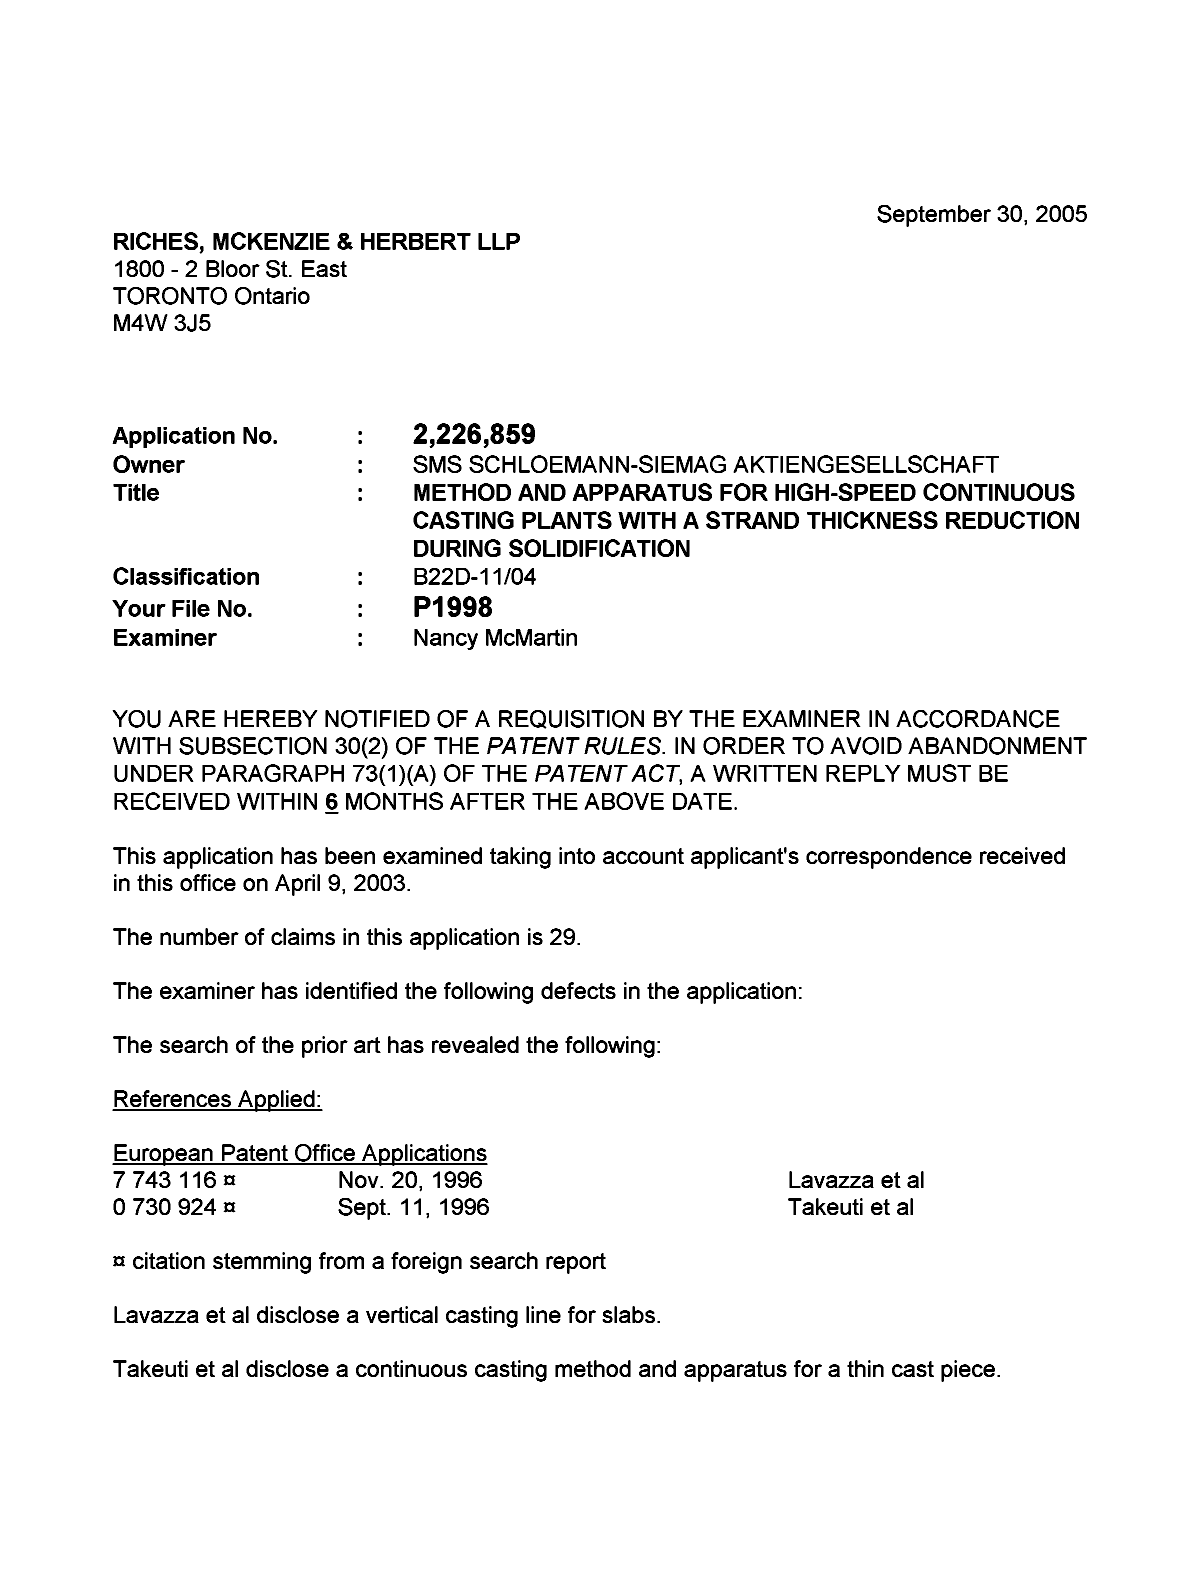 Canadian Patent Document 2226859. Prosecution-Amendment 20050930. Image 1 of 3